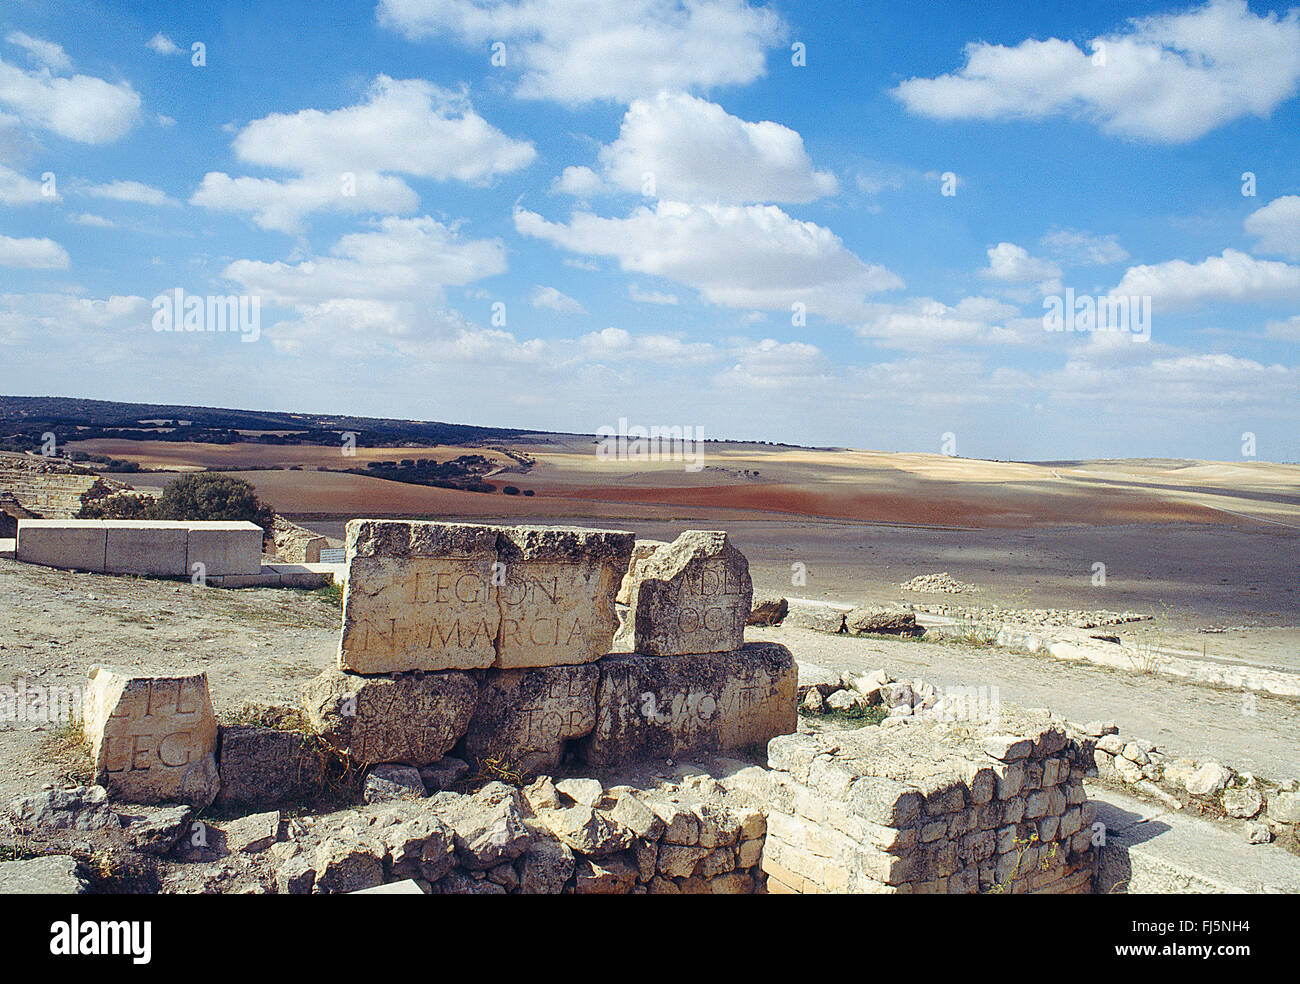 Roman ruins and landscape. Segobriga Archaeological Park, Saelices, Cuenca province, Castilla La Mancha, Spain. Stock Photo